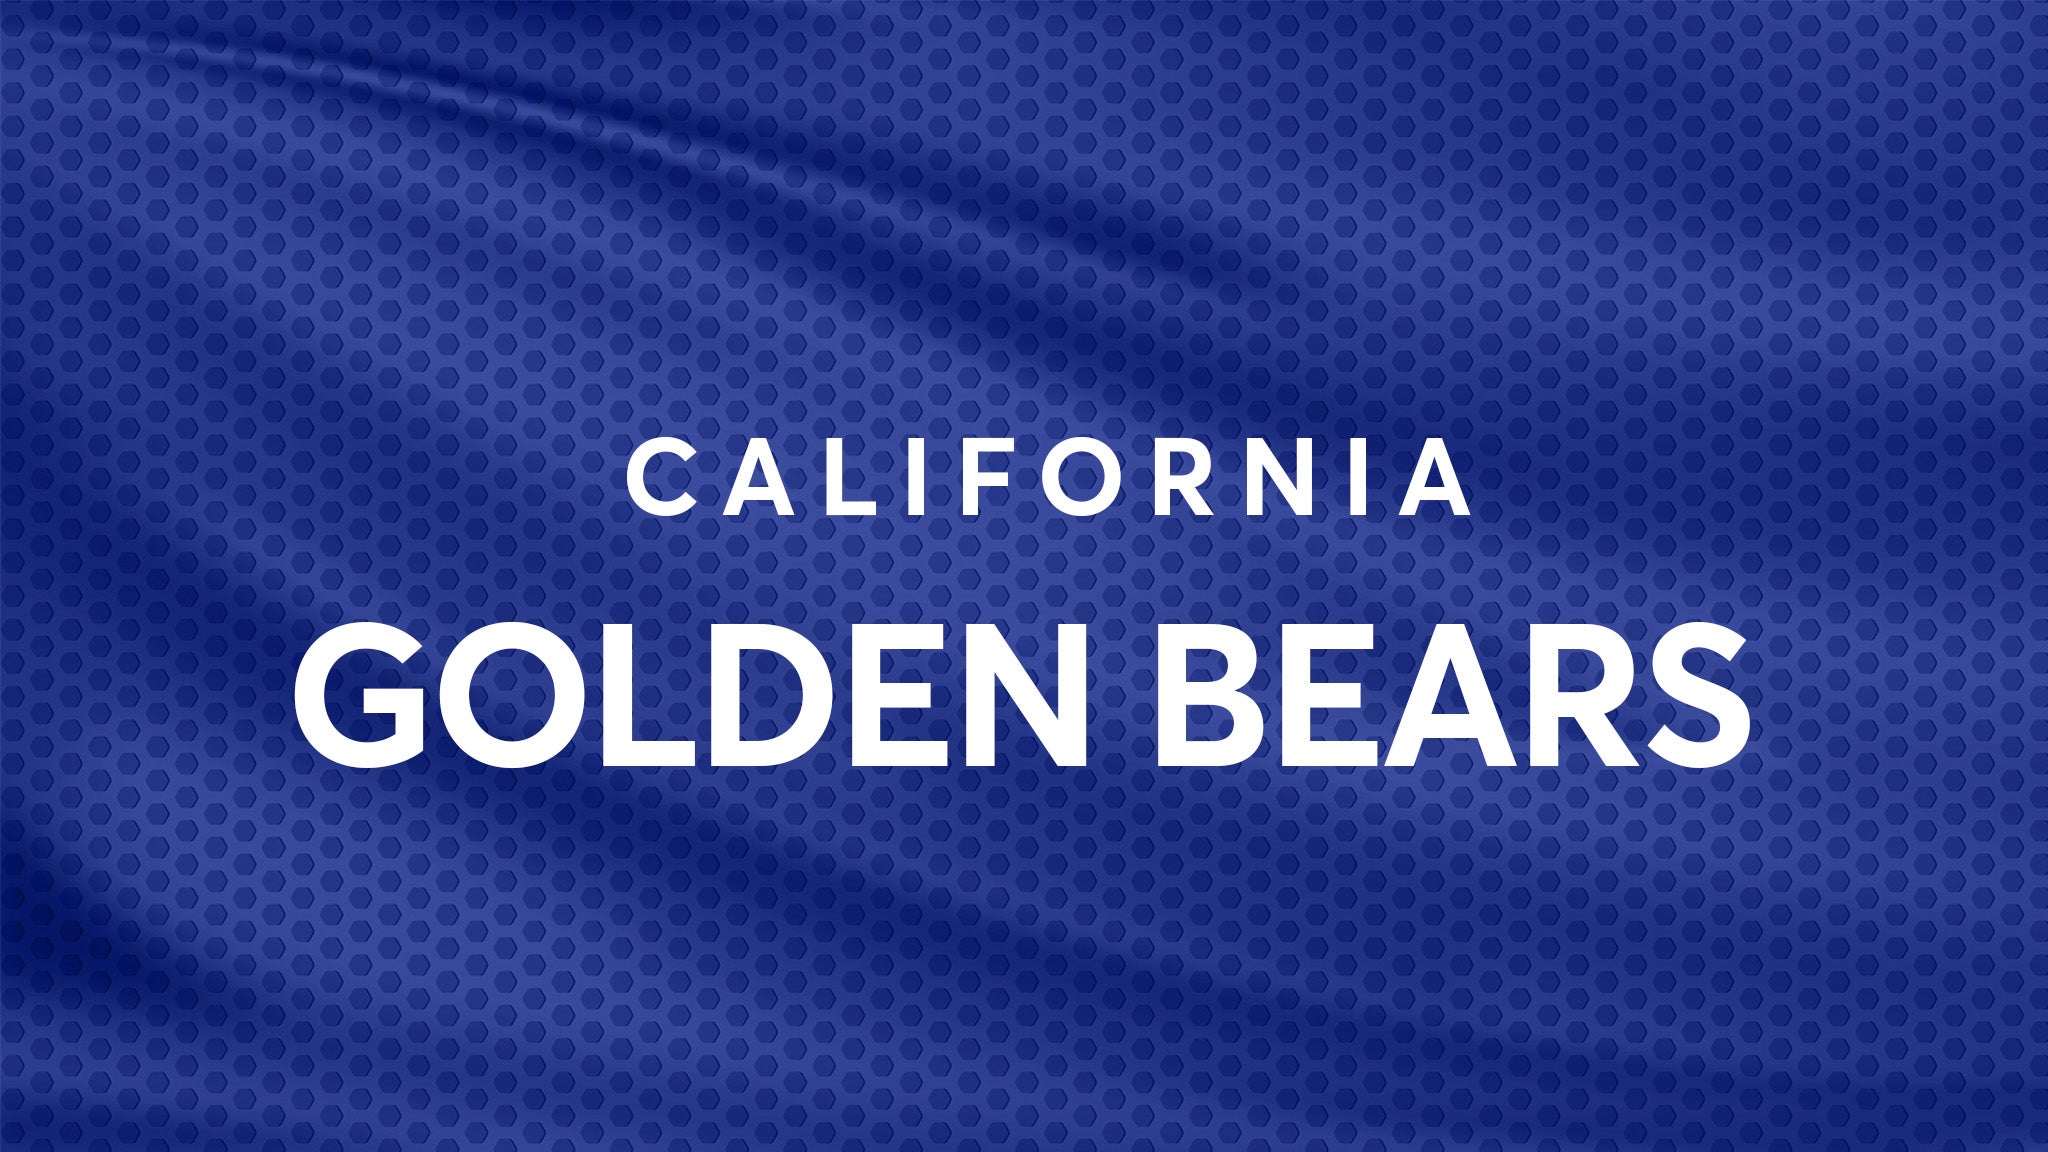 California Golden Bears Football vs. UC Davis Aggies Football